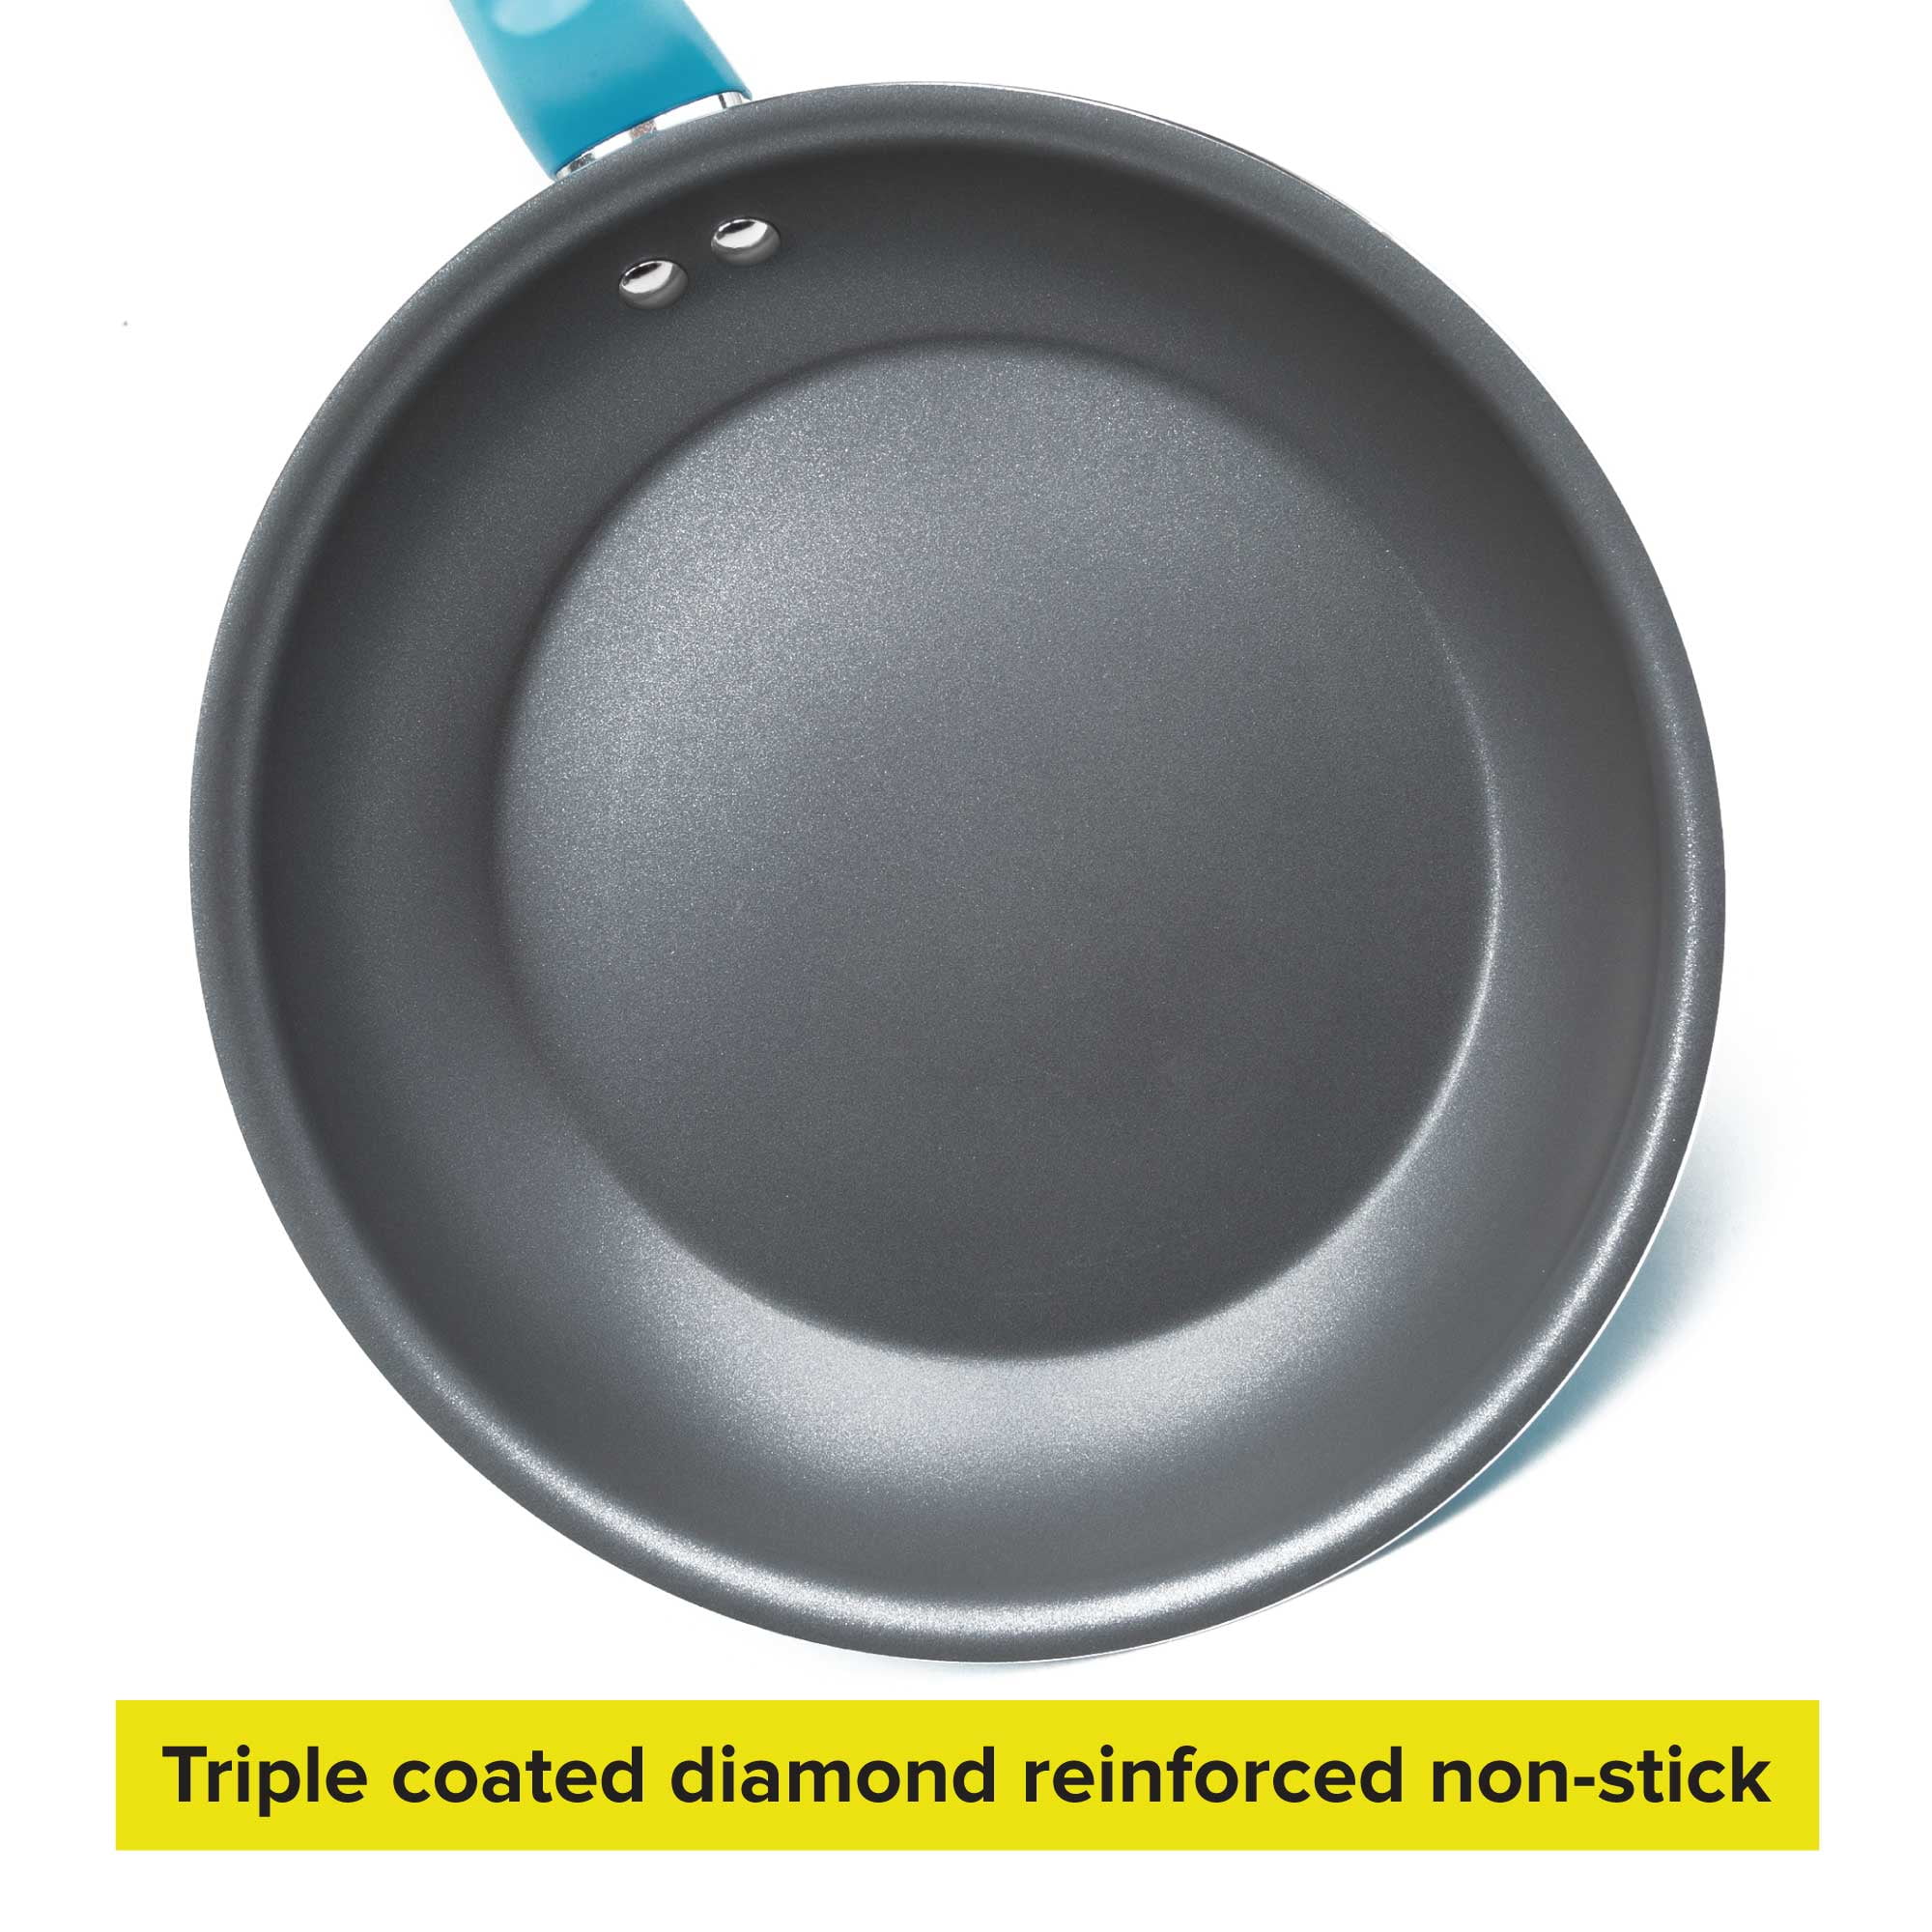 Tasty Non-Stick Diamond Reinforced Blue Cookware Set, 11 Piece 